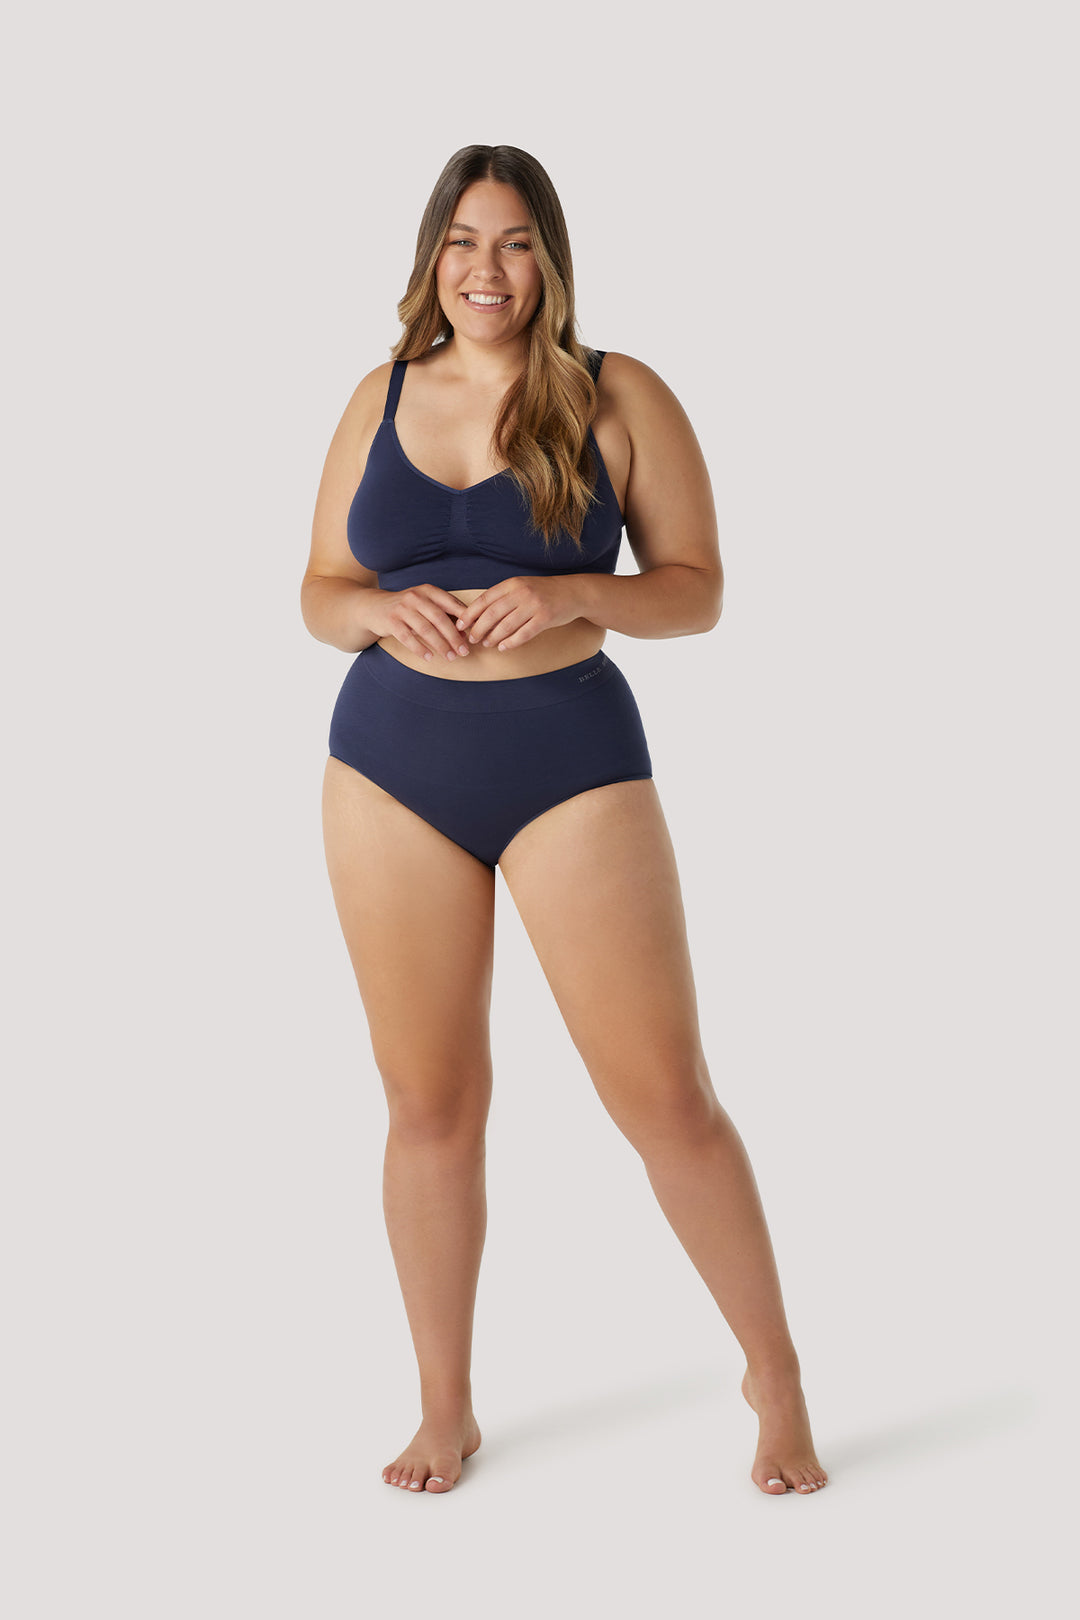 Women's breathable bamboo high waist control and firming underwear | Bella Bodies Australia | Midnight